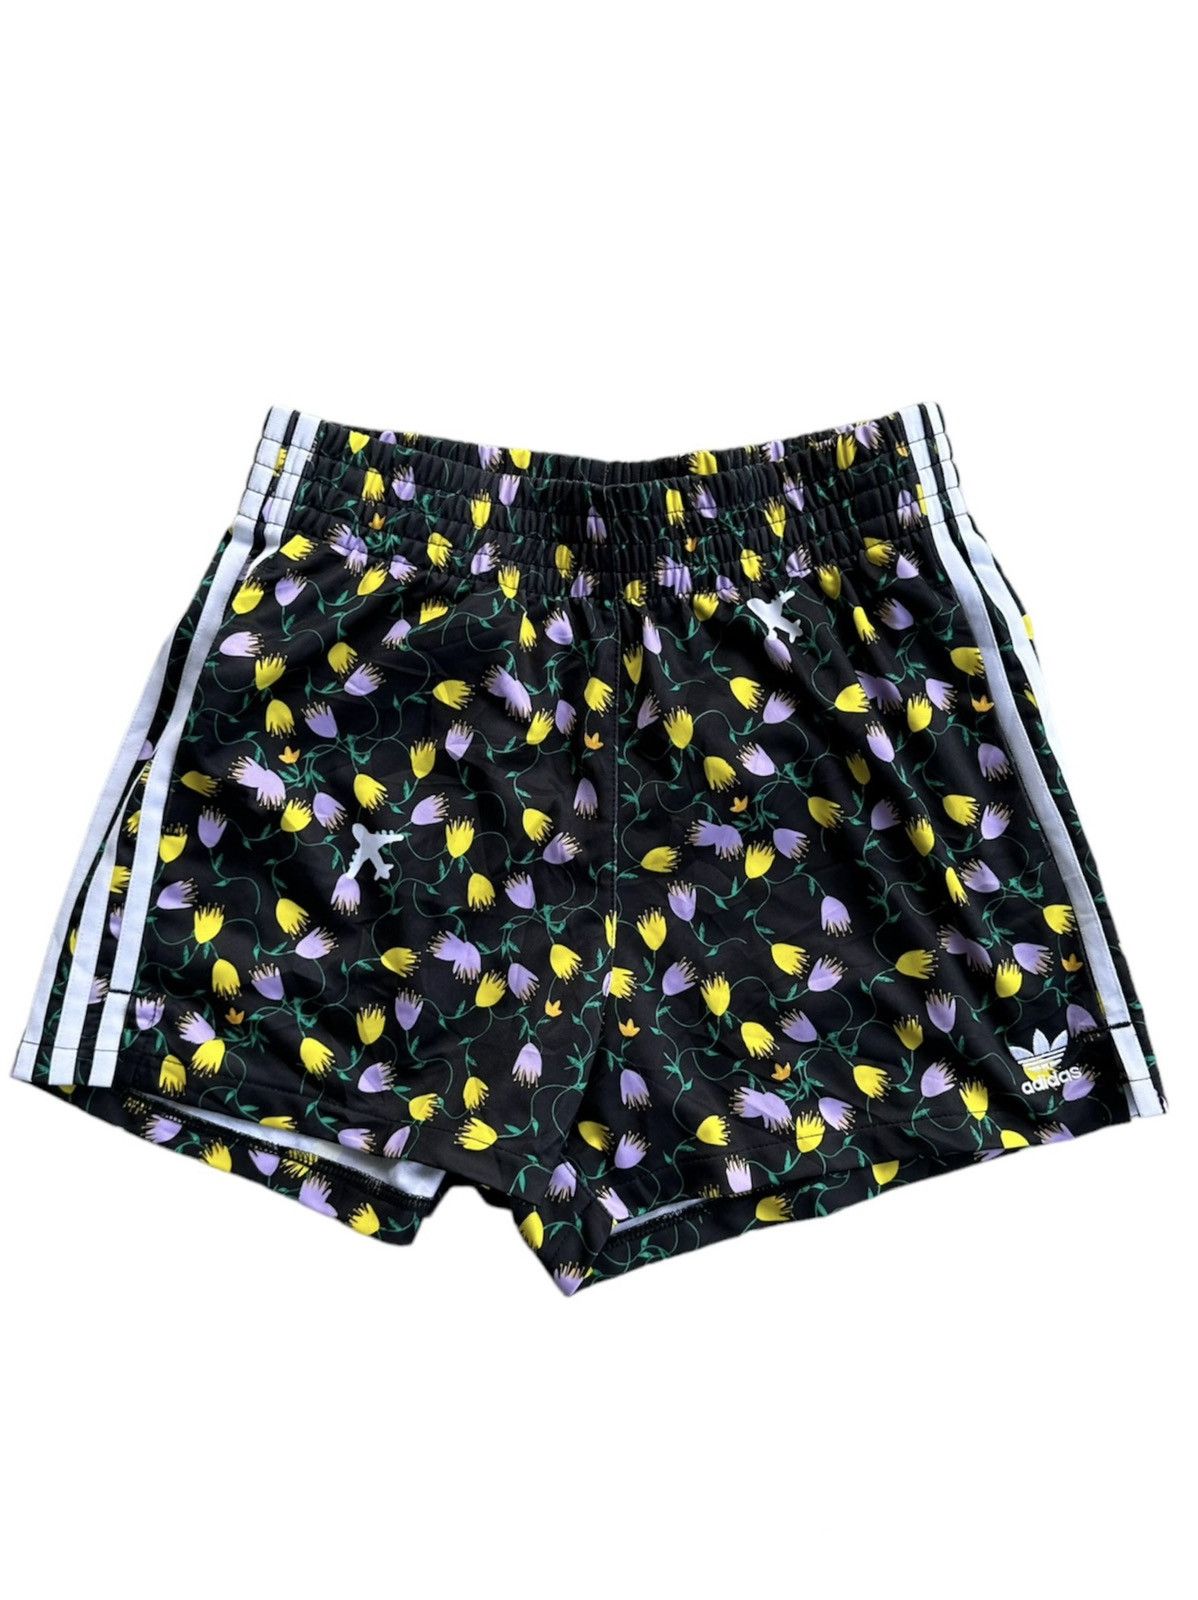 Adidas Women’s Floral Sport Shorts - 2